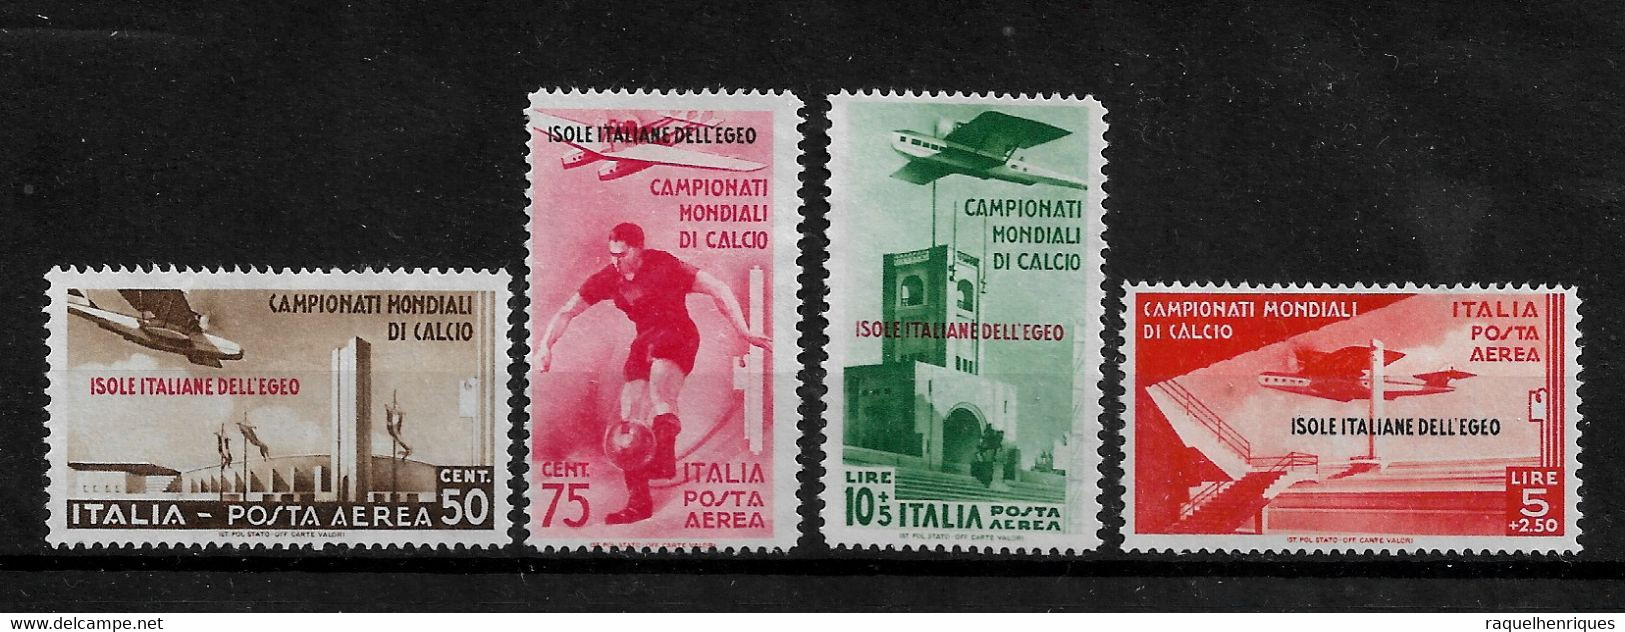 ITALY STAMP - AEGEAN ISLANDS - 1934 Airmail - Football World Cup SET M NG (BA5#108) - Egée (Autonome Adm.)